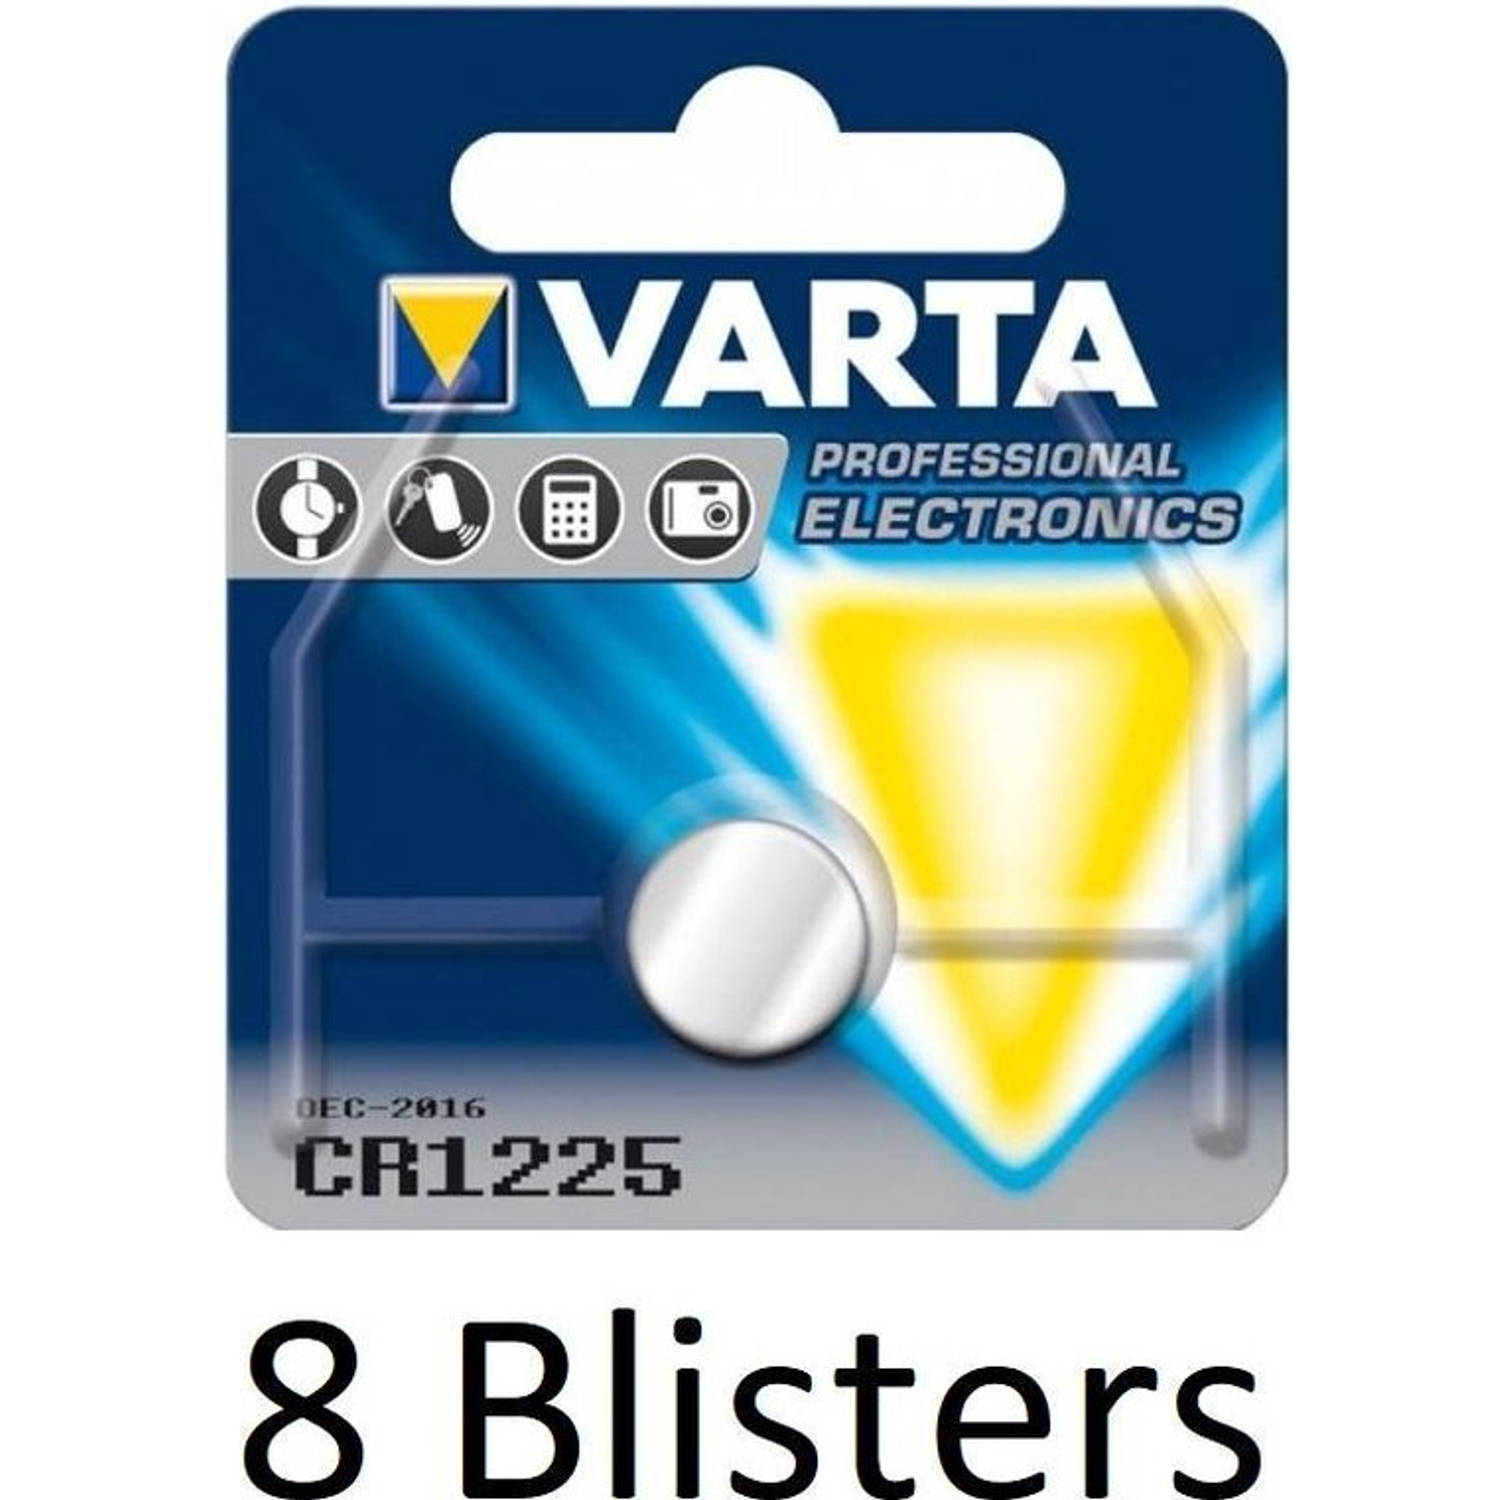 8 stuks (8 blisters a 1 st) Varta CR1225 Wegwerpbatterij Lithium